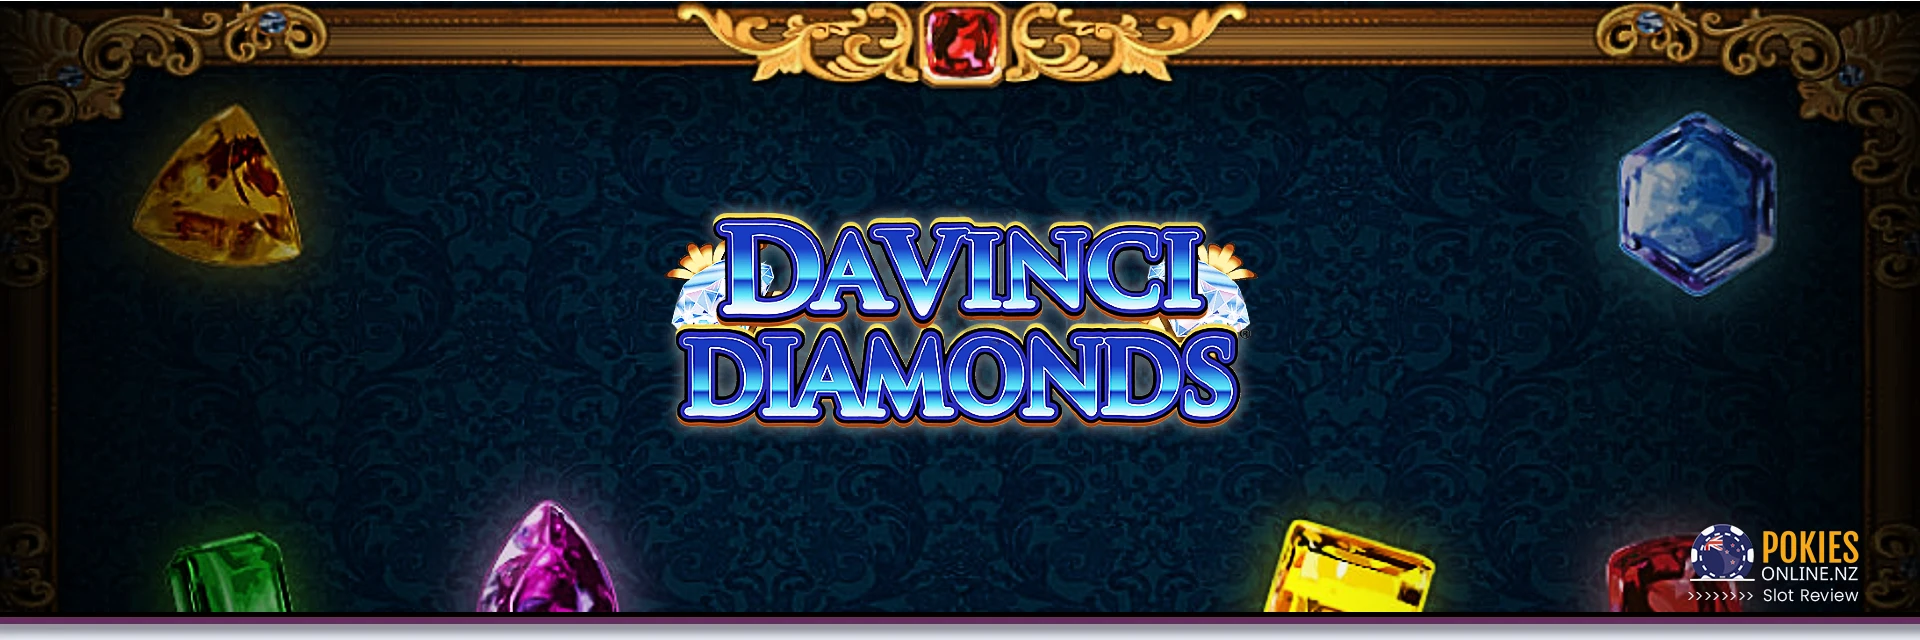 Davinci Diamonds Slot Banner